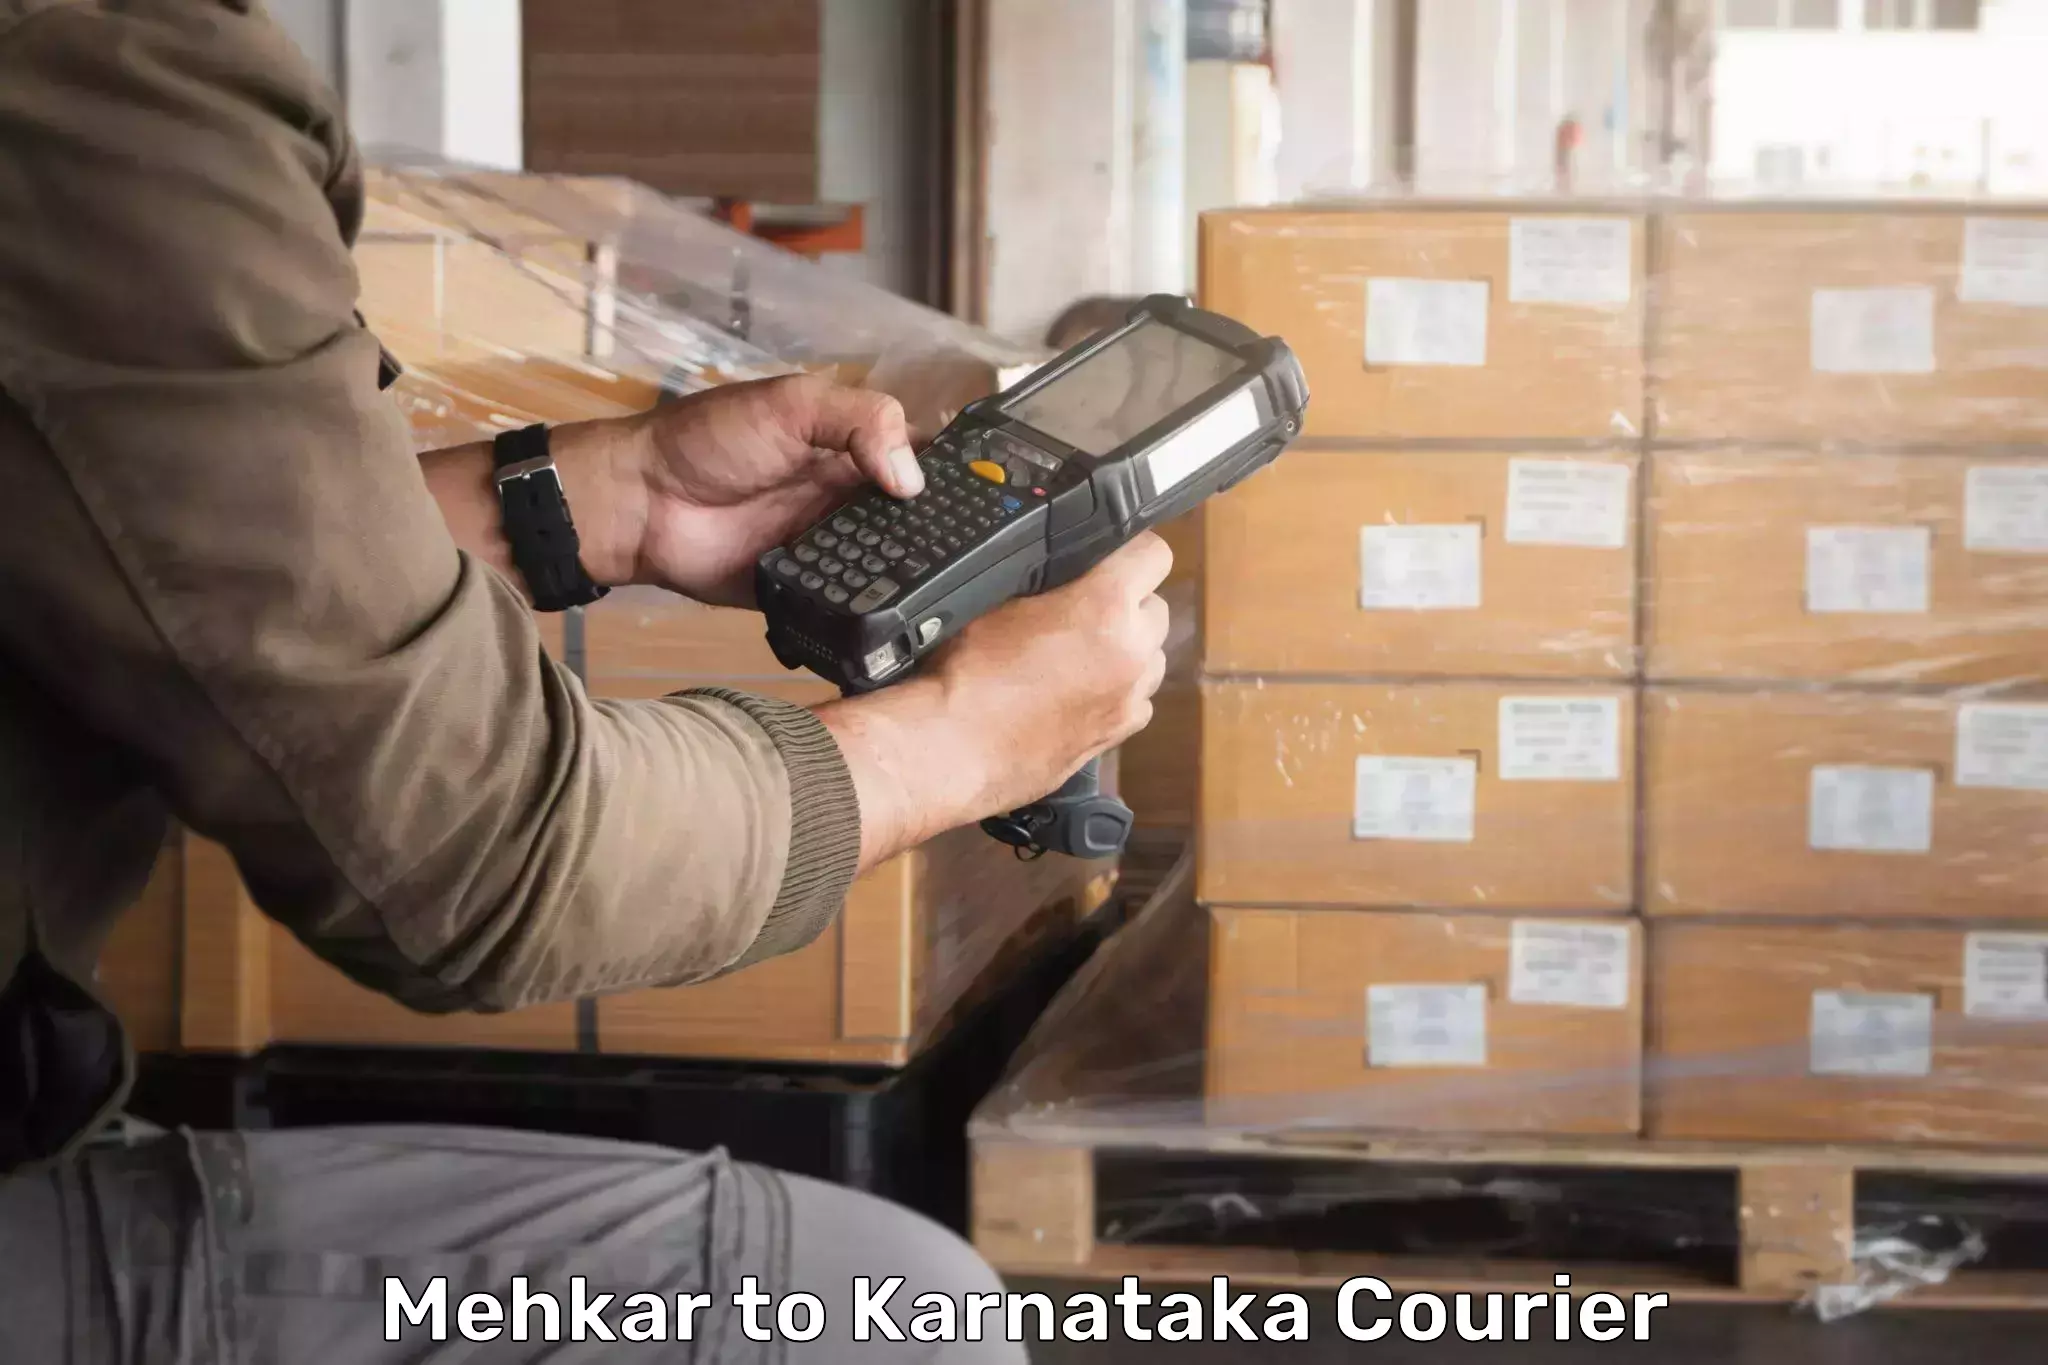 Advanced courier platforms Mehkar to Karnataka